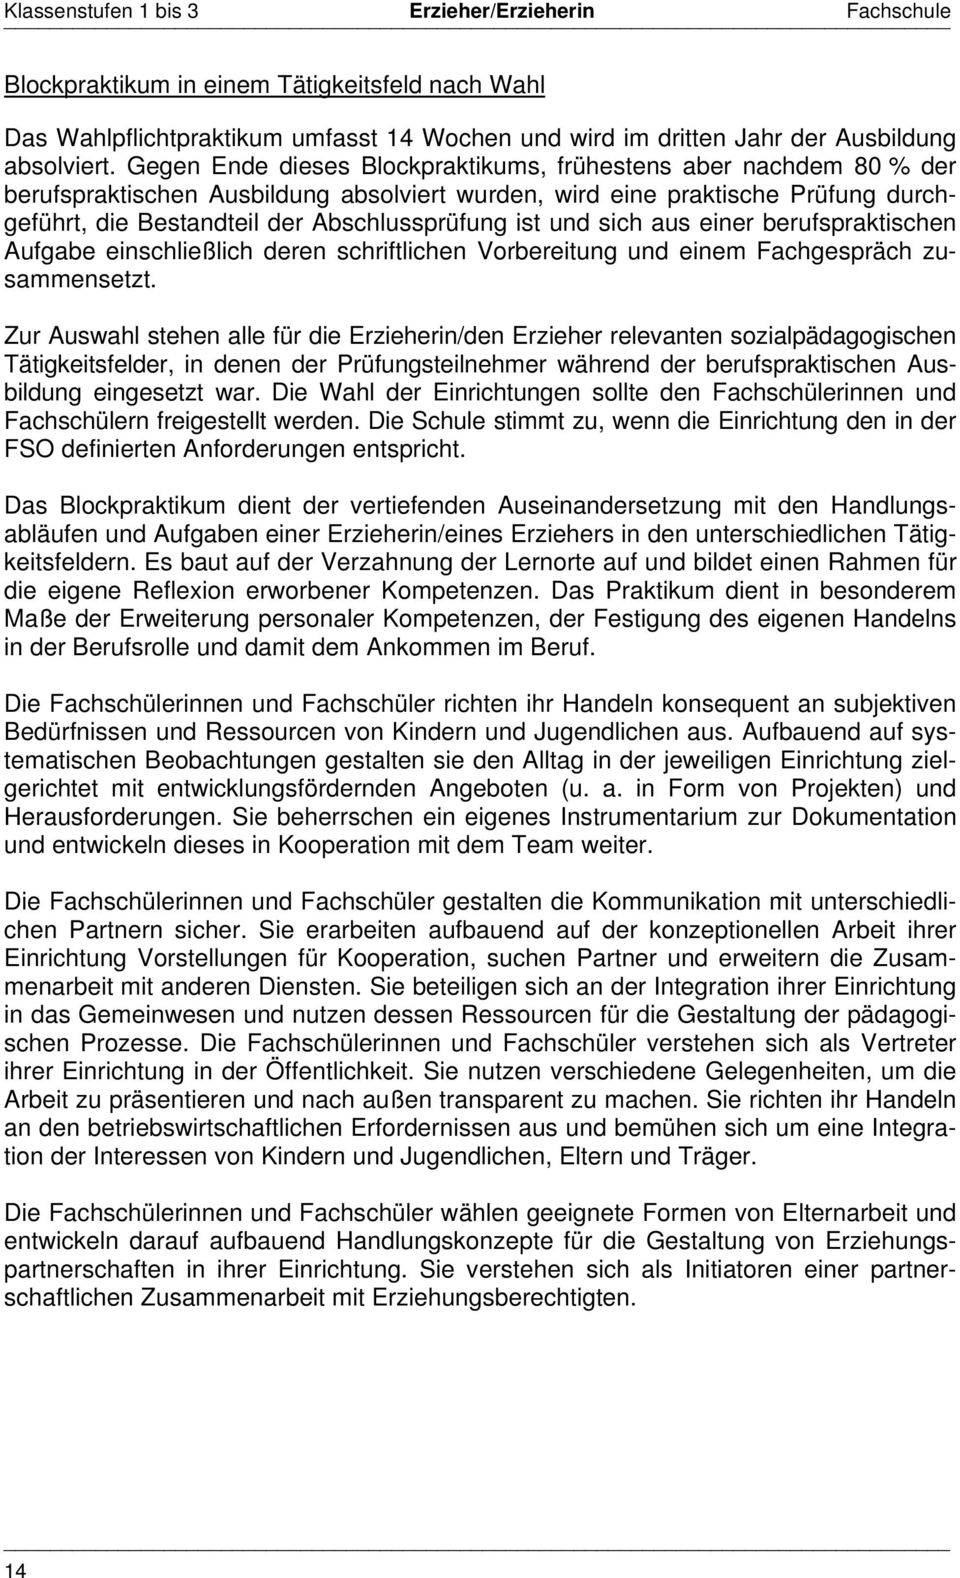 Freistaat Sachsen Sachsisches Staatsministerium Fur Kultus Pdf Free Download